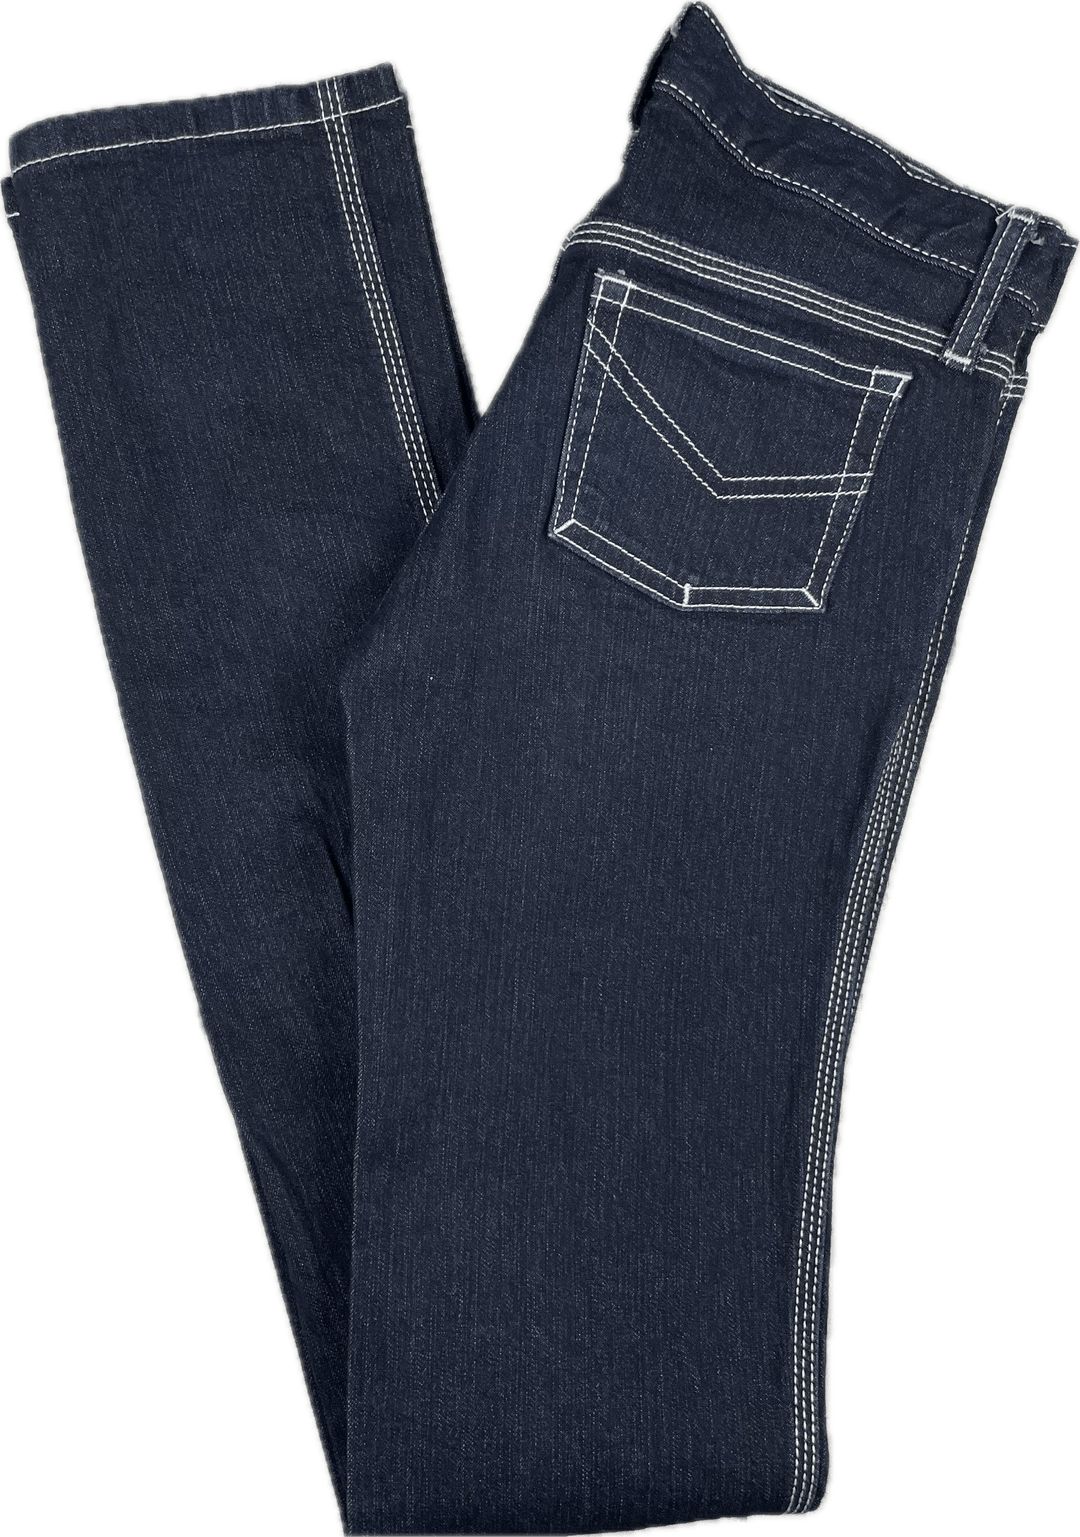 Australian Made Bettina Liano High Rise Skinny Jeans- Size 25 or 7AU - Jean Pool